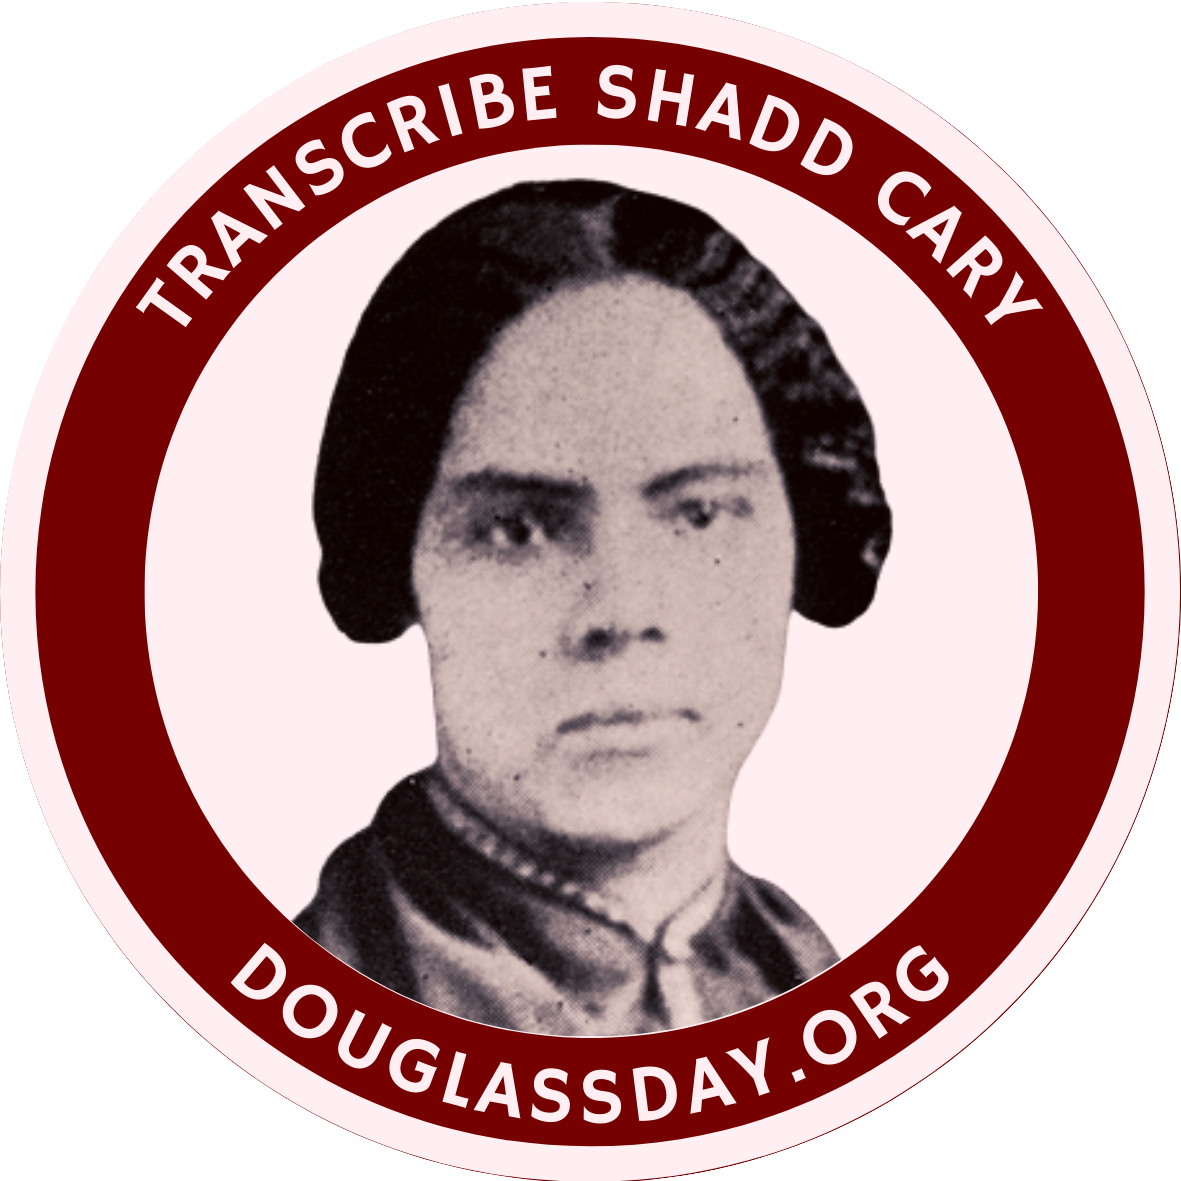 Image of Mary Ann Shadd Cary and motto "Transcribe Shadd Cary"